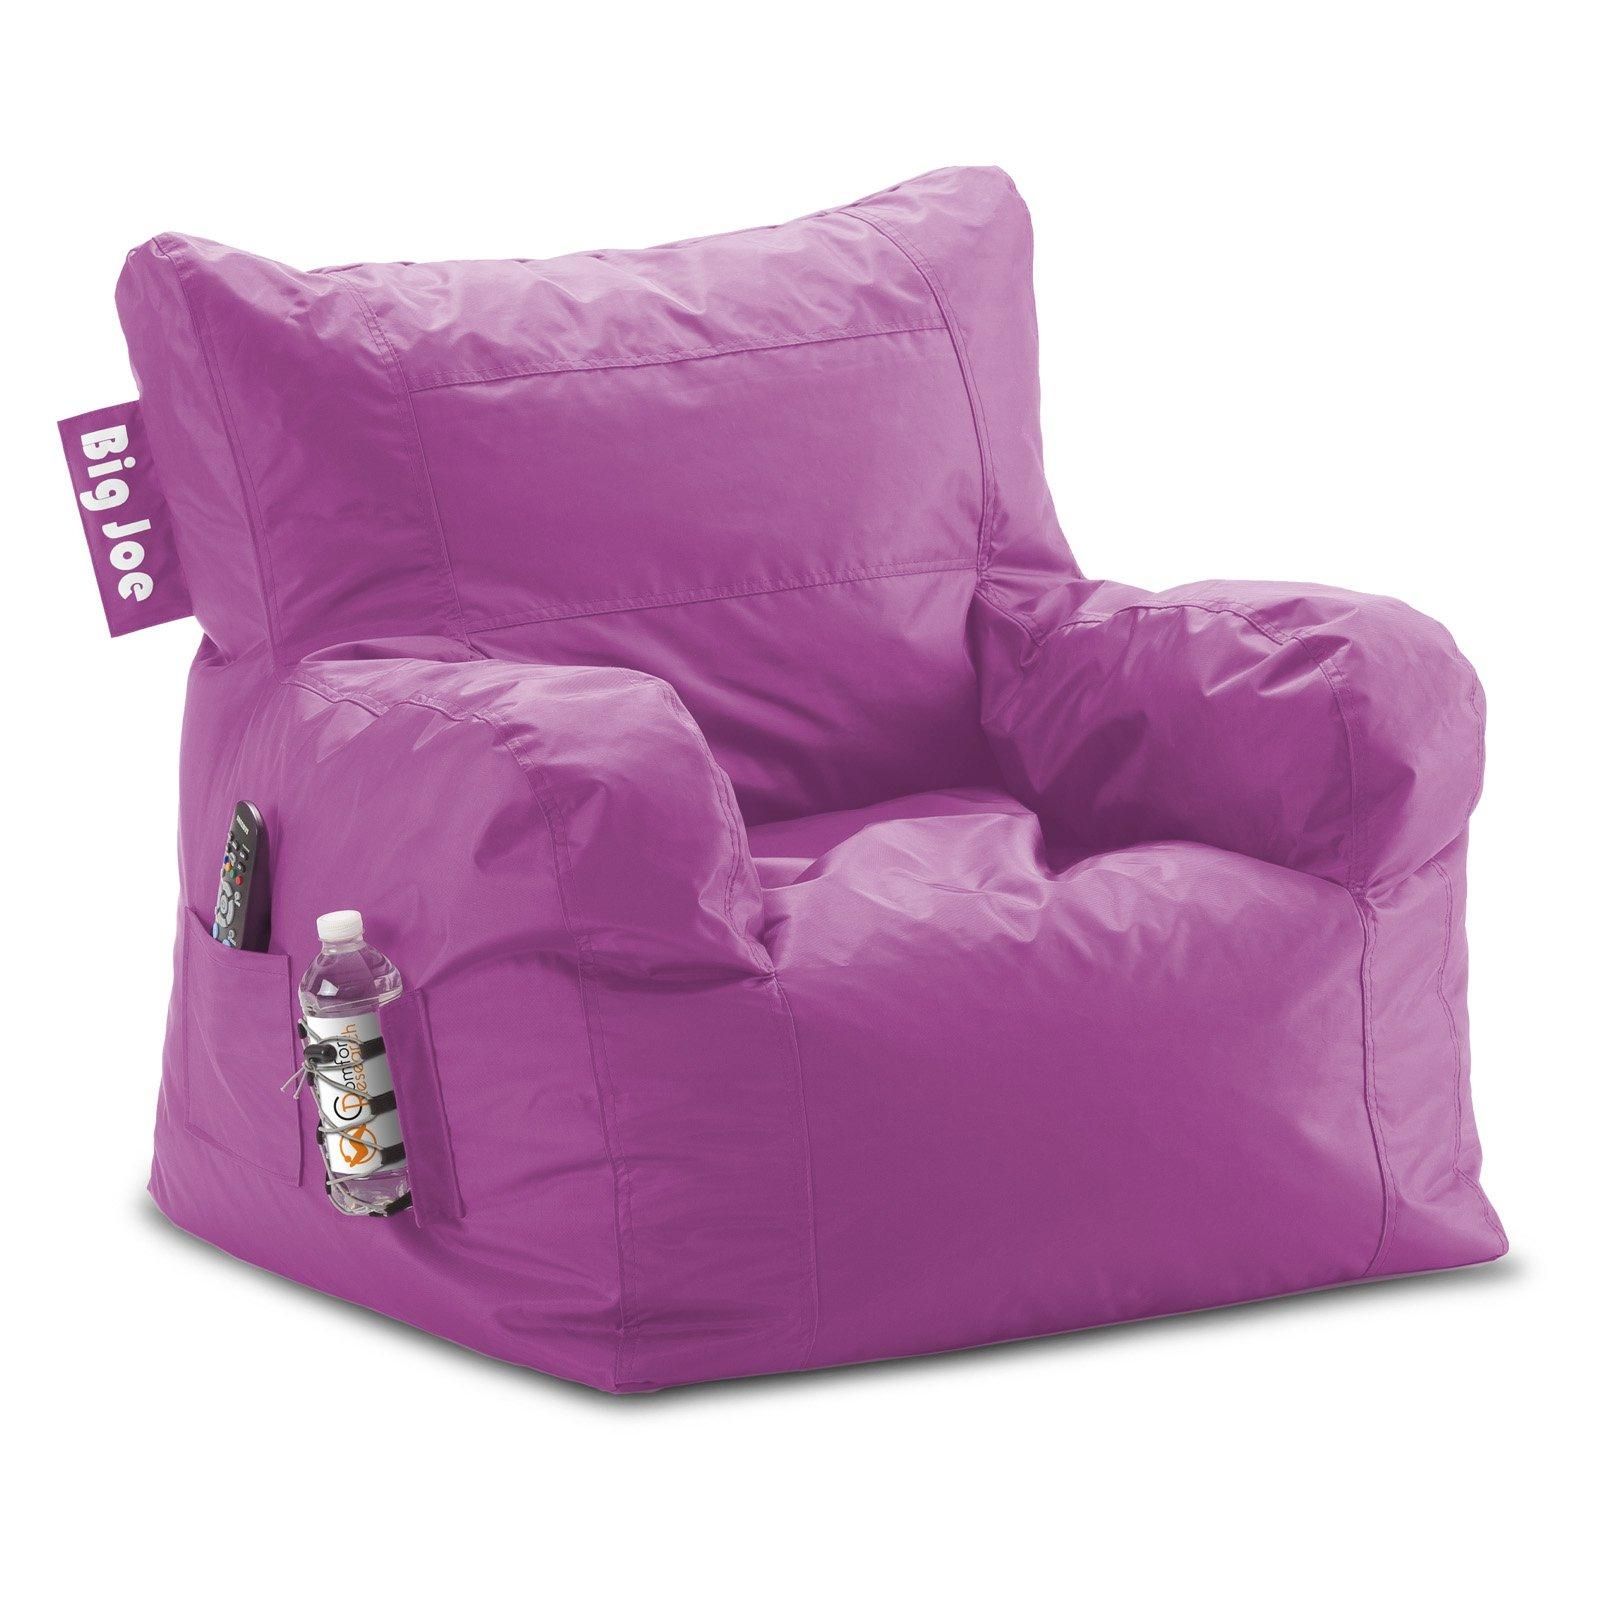 Big Joe Dorm Bean Bag Chair | Hayneedle Within Bean Bag Sofa Chairs (View 2 of 20)